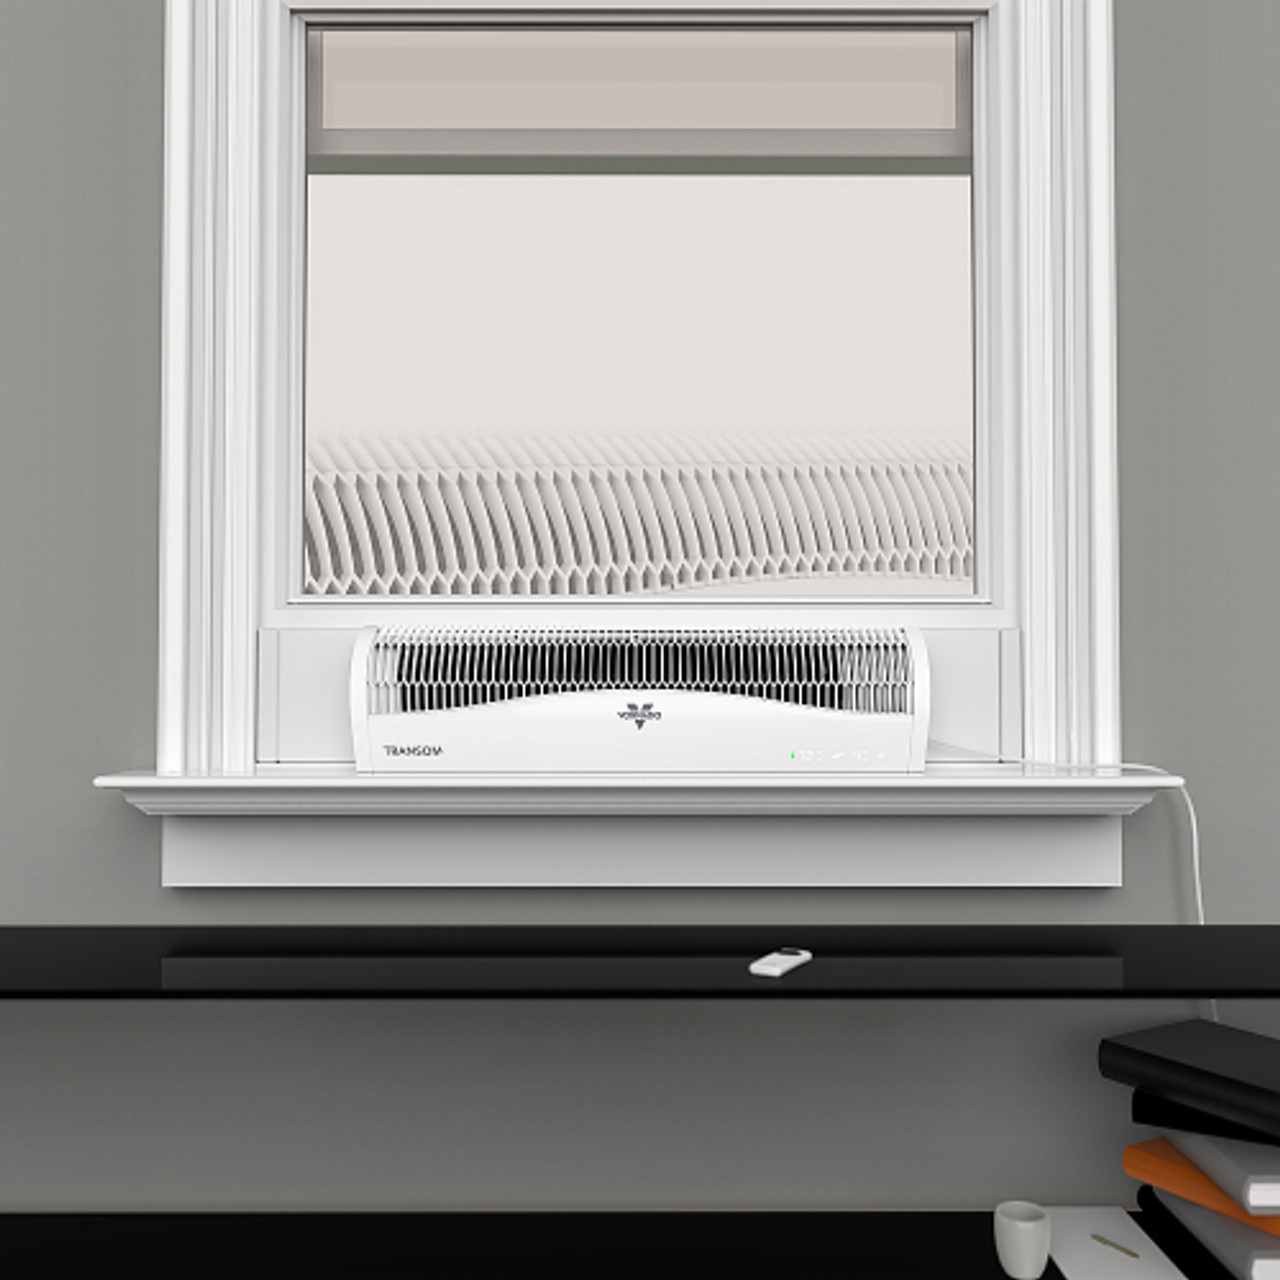 Vornado - TRANSOM Window Fan with Reversible Exhaust - Ice White